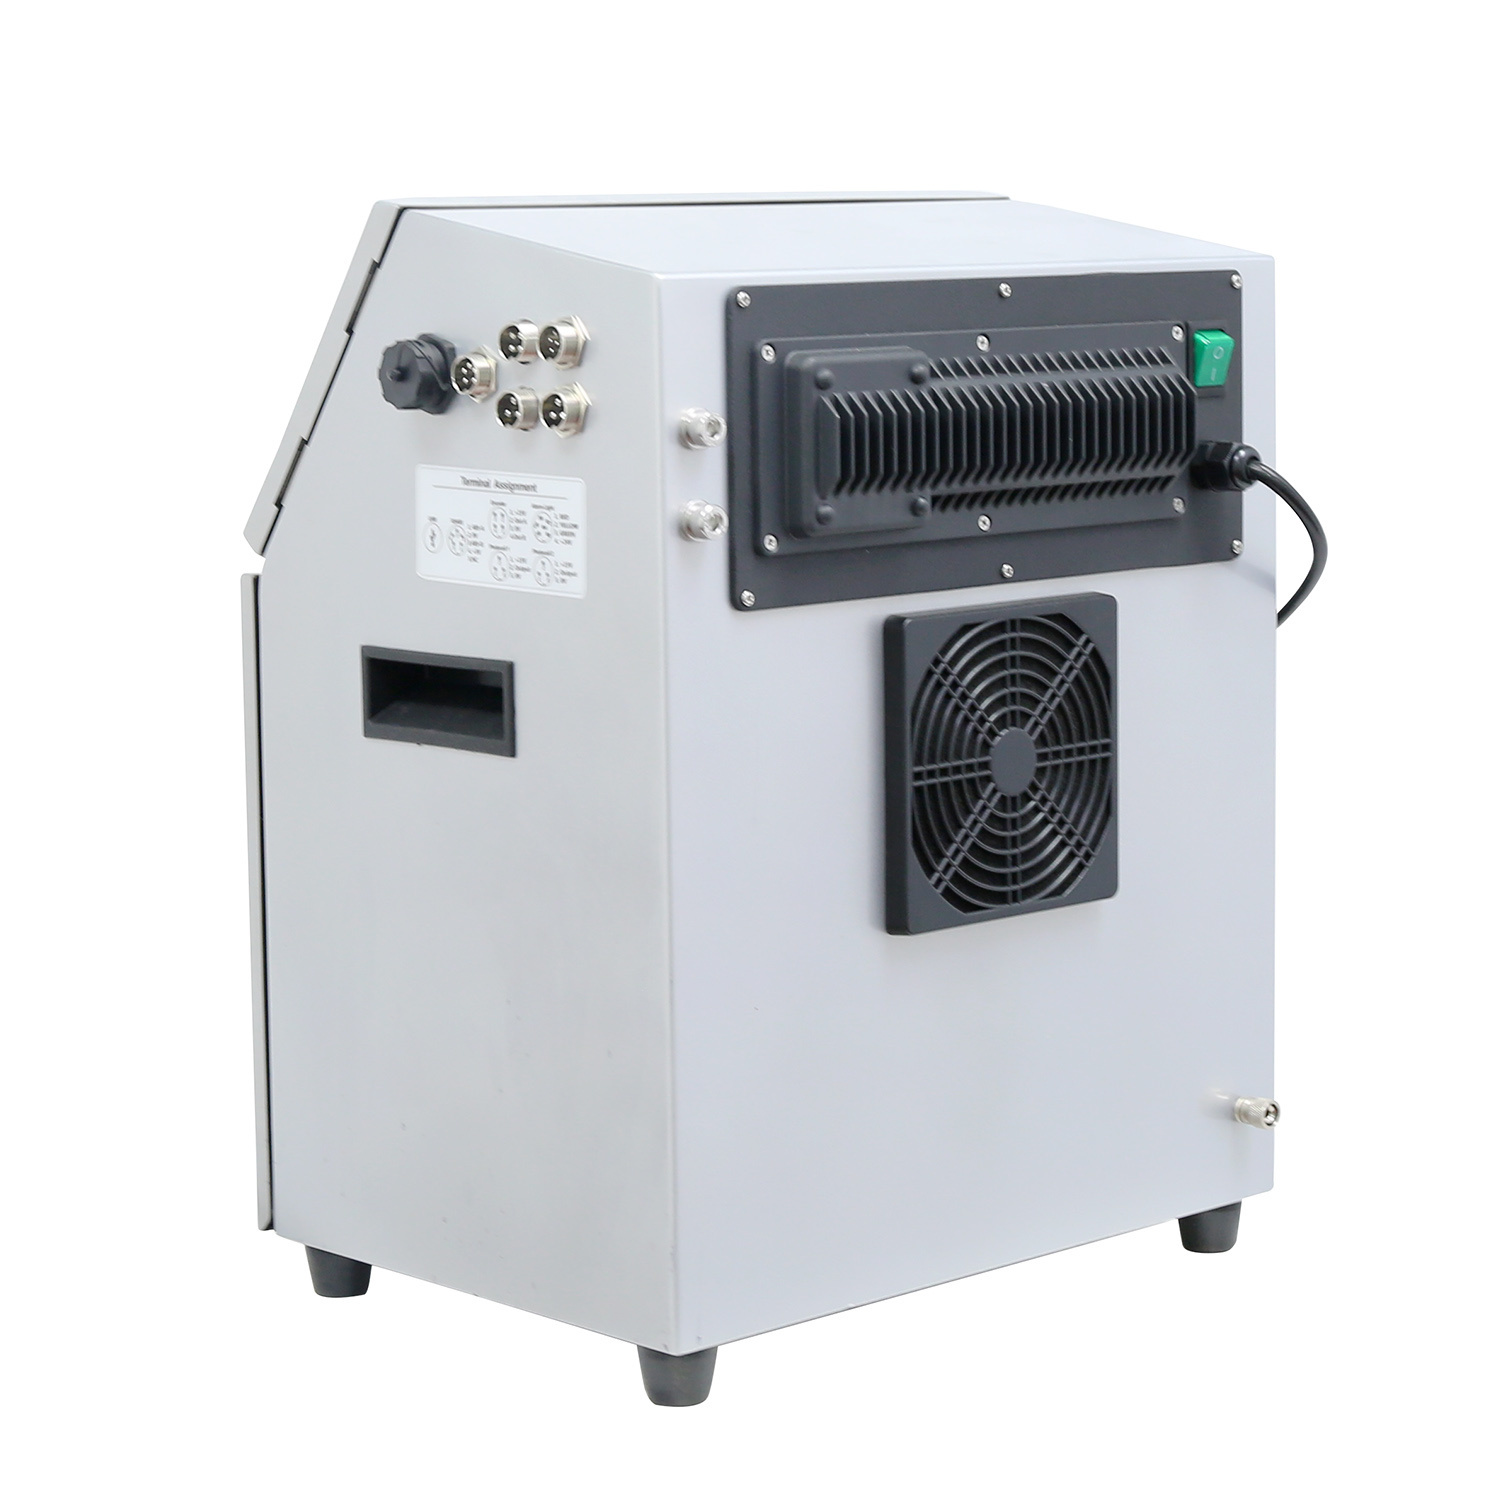 Lead Tech Lt800 Marking Machine Laser Printer